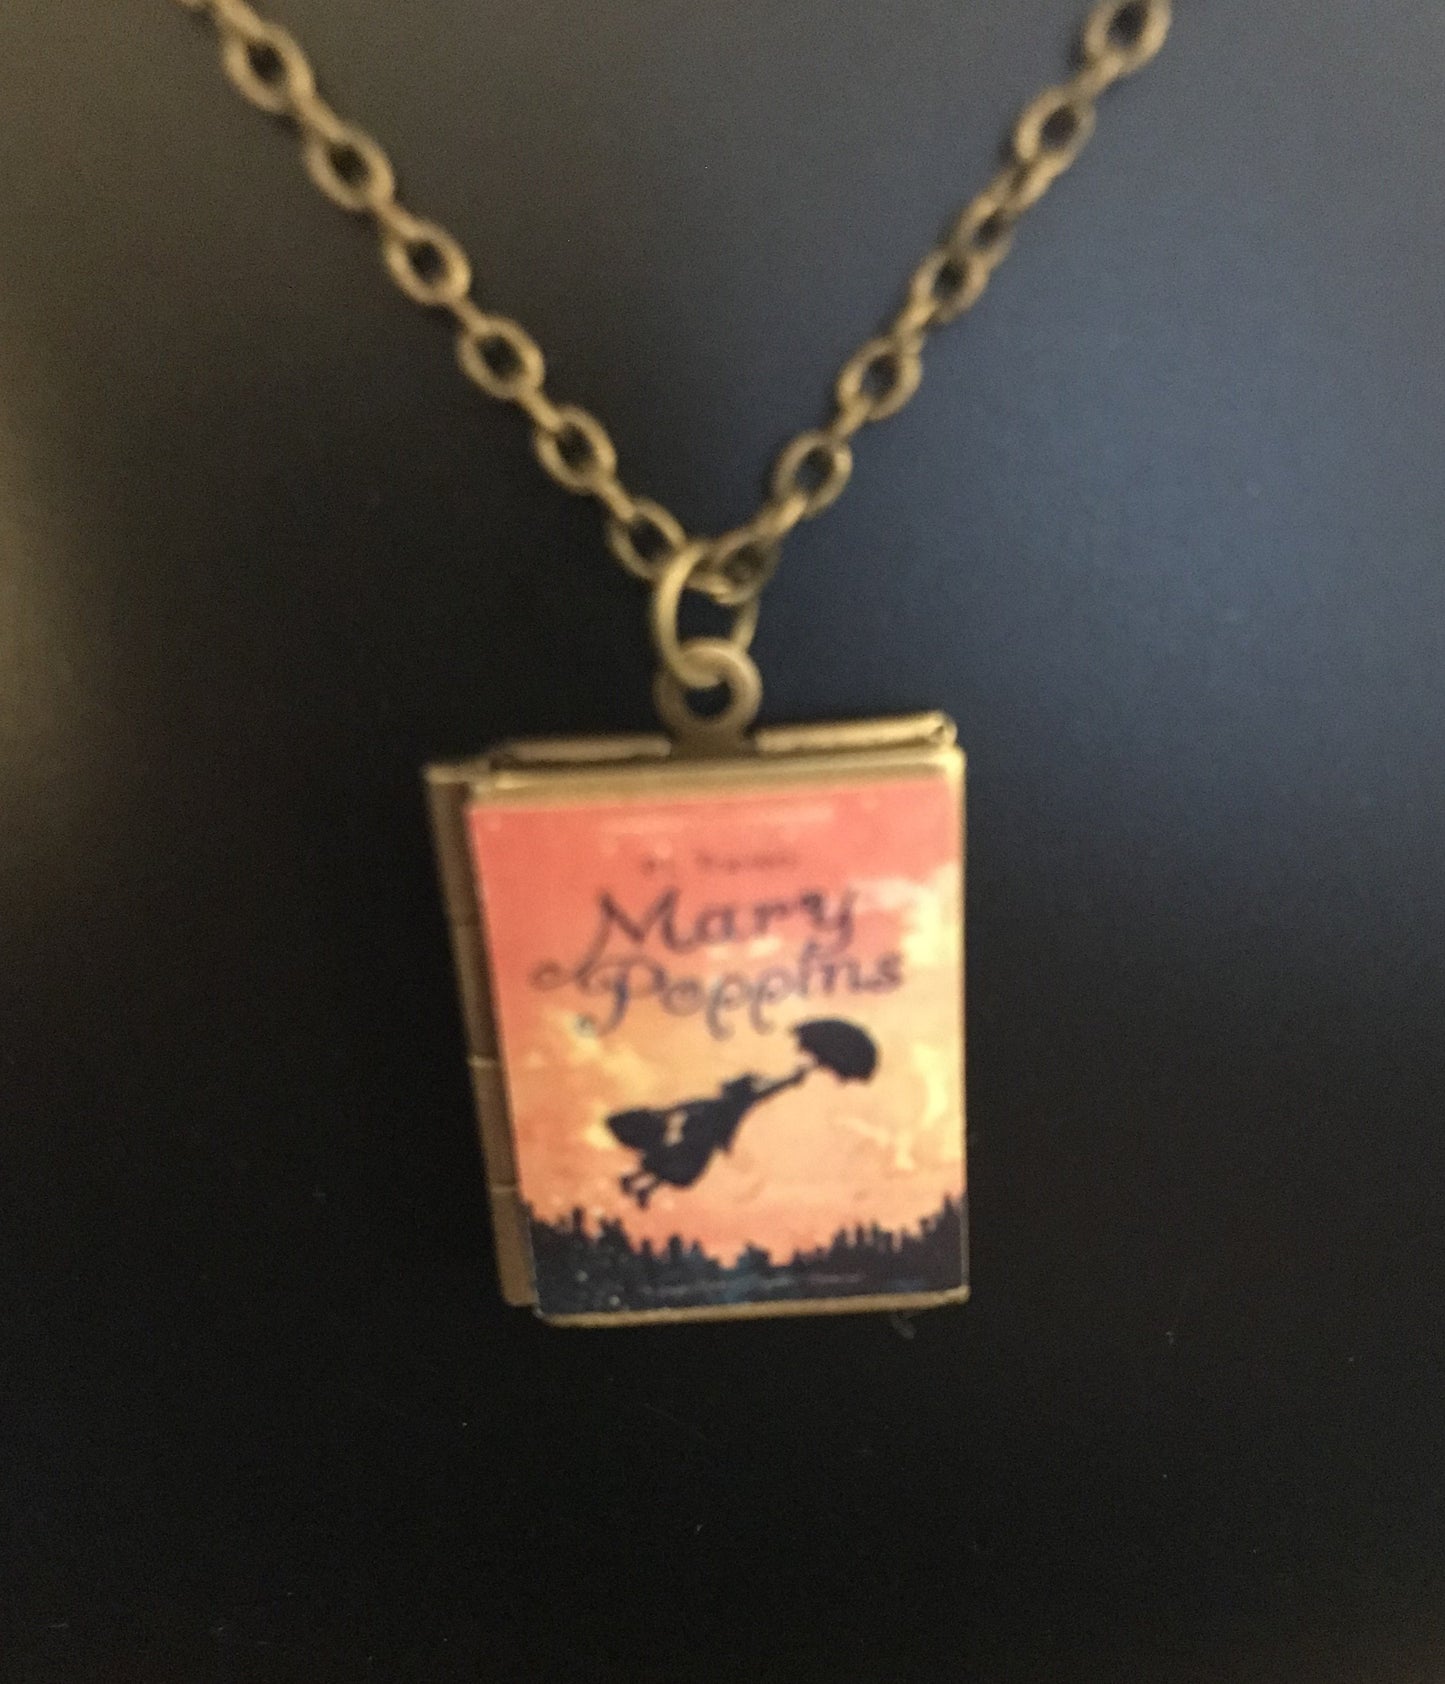 Book Locket "Mary Poppins" Necklace Bronze